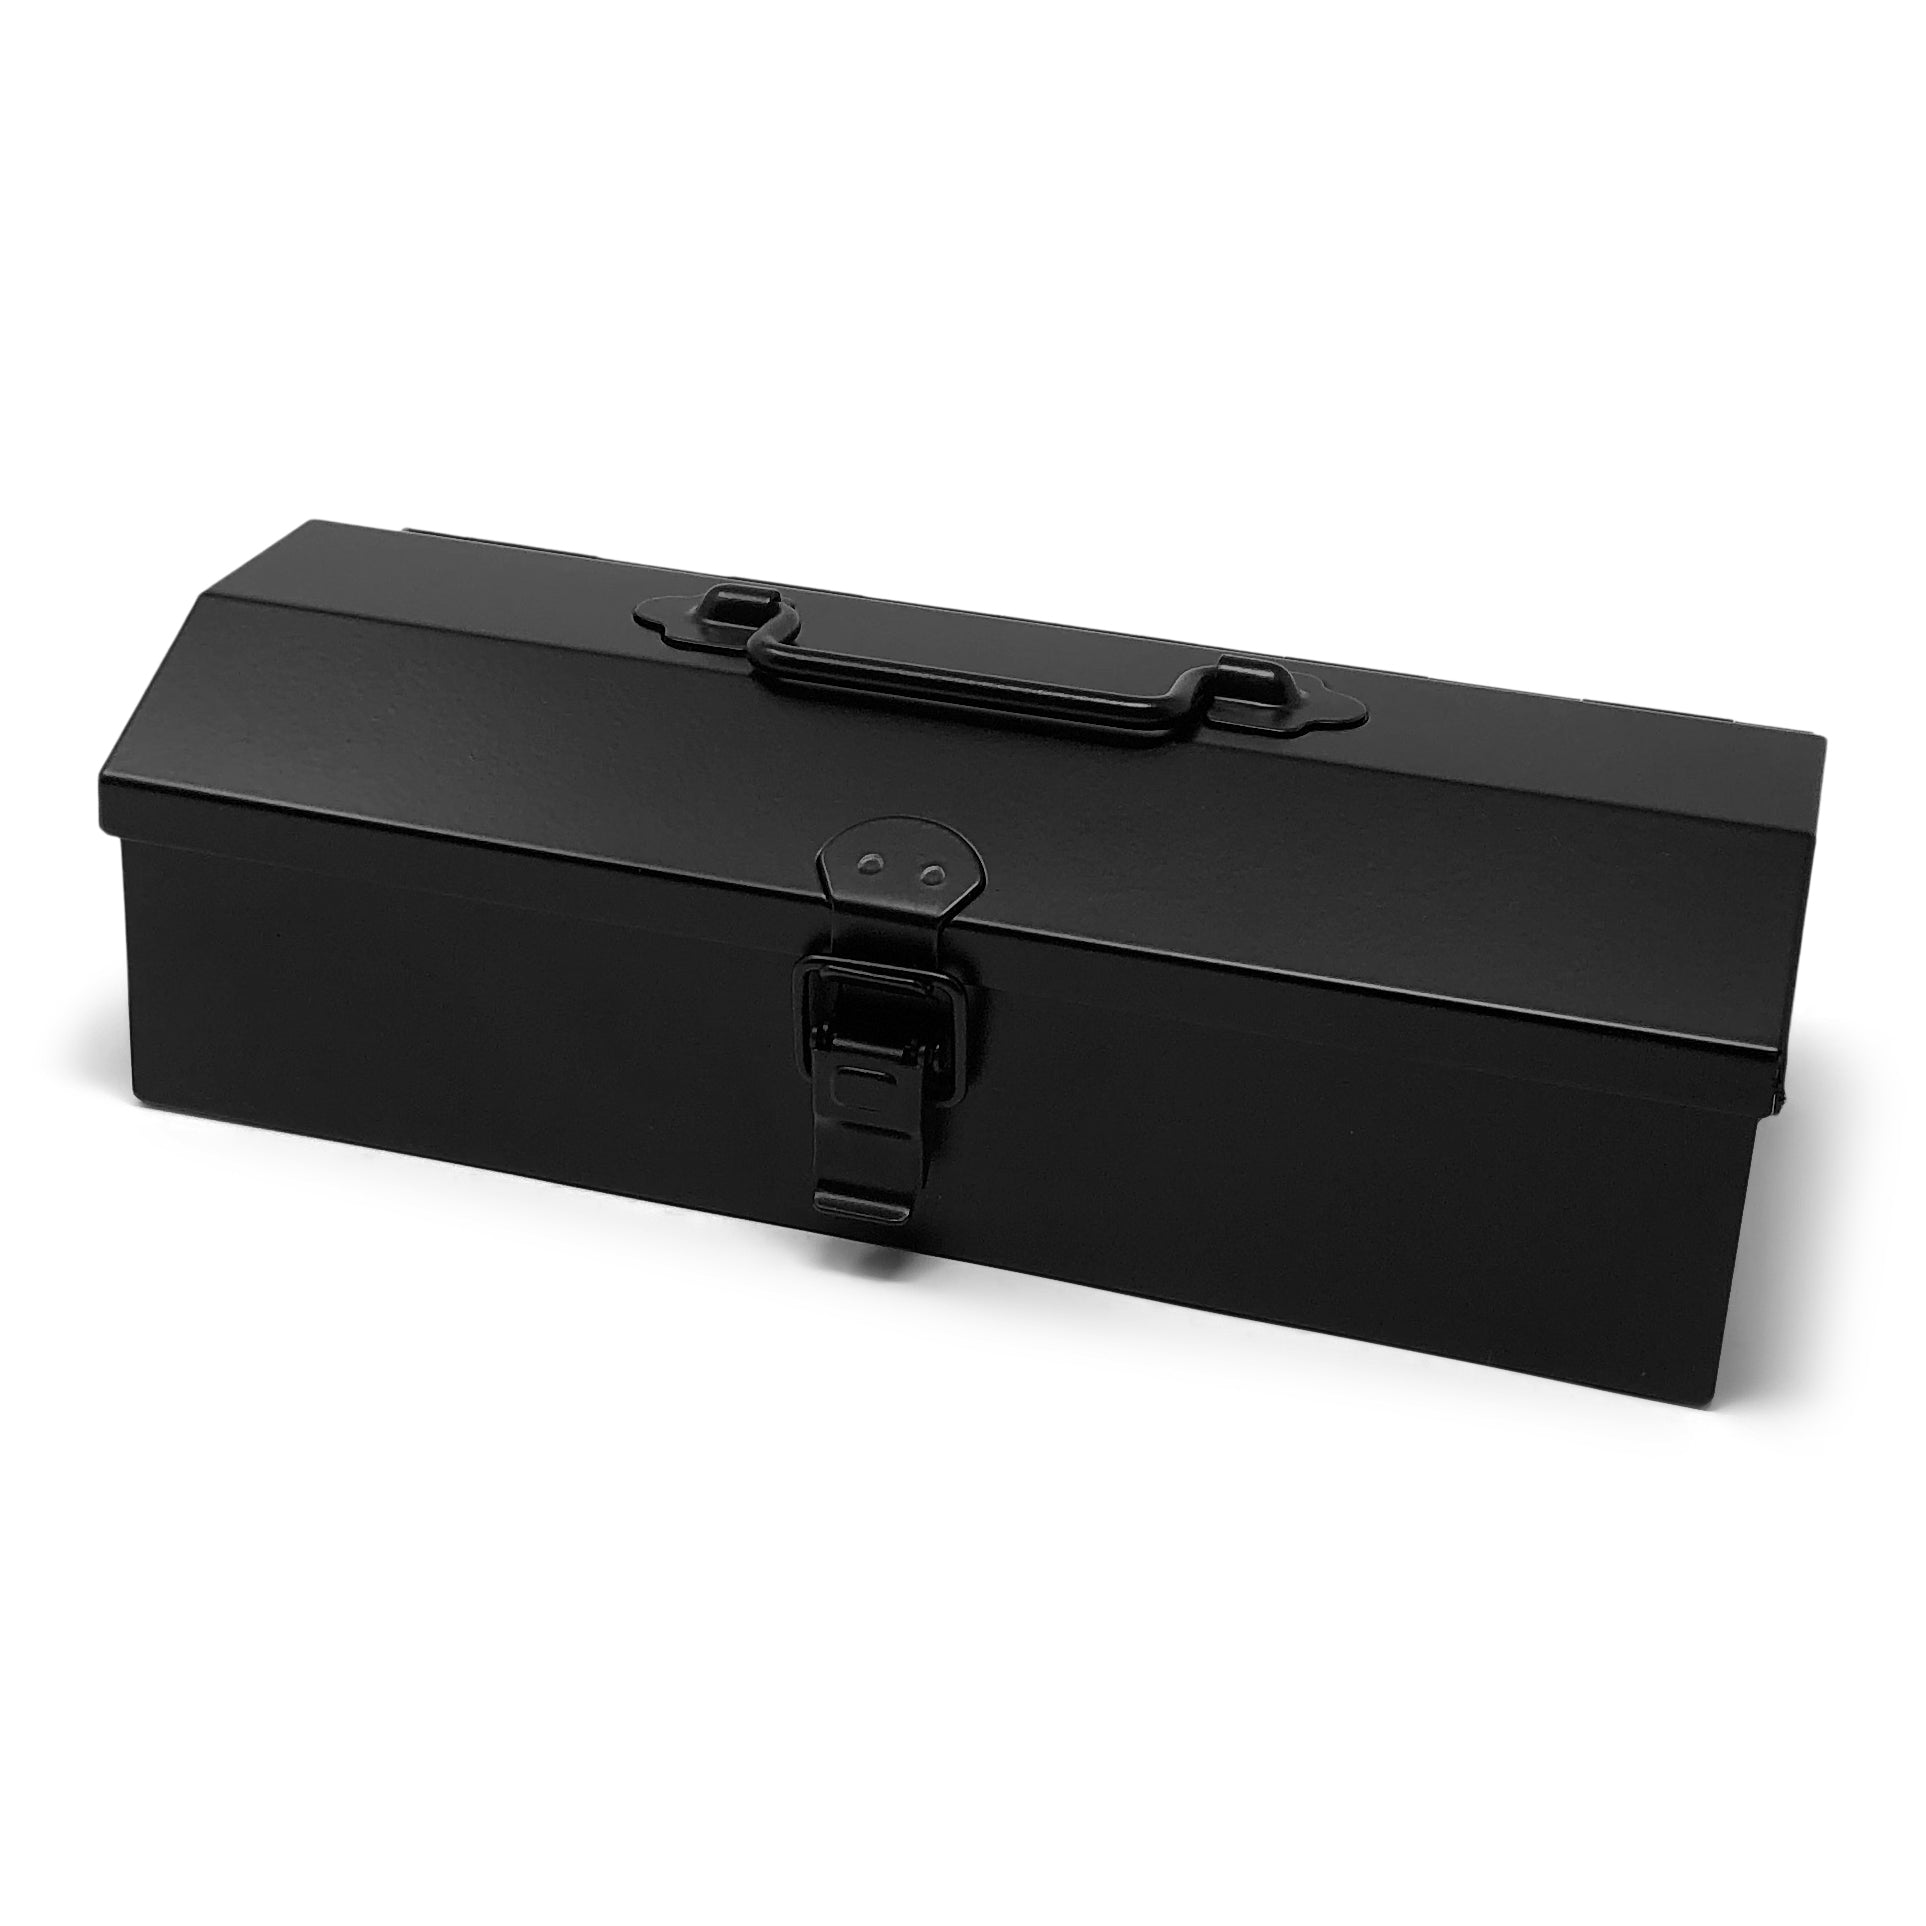 Toyo] Steel Mini Box // Y-20 (Large) – Baum-kuchen